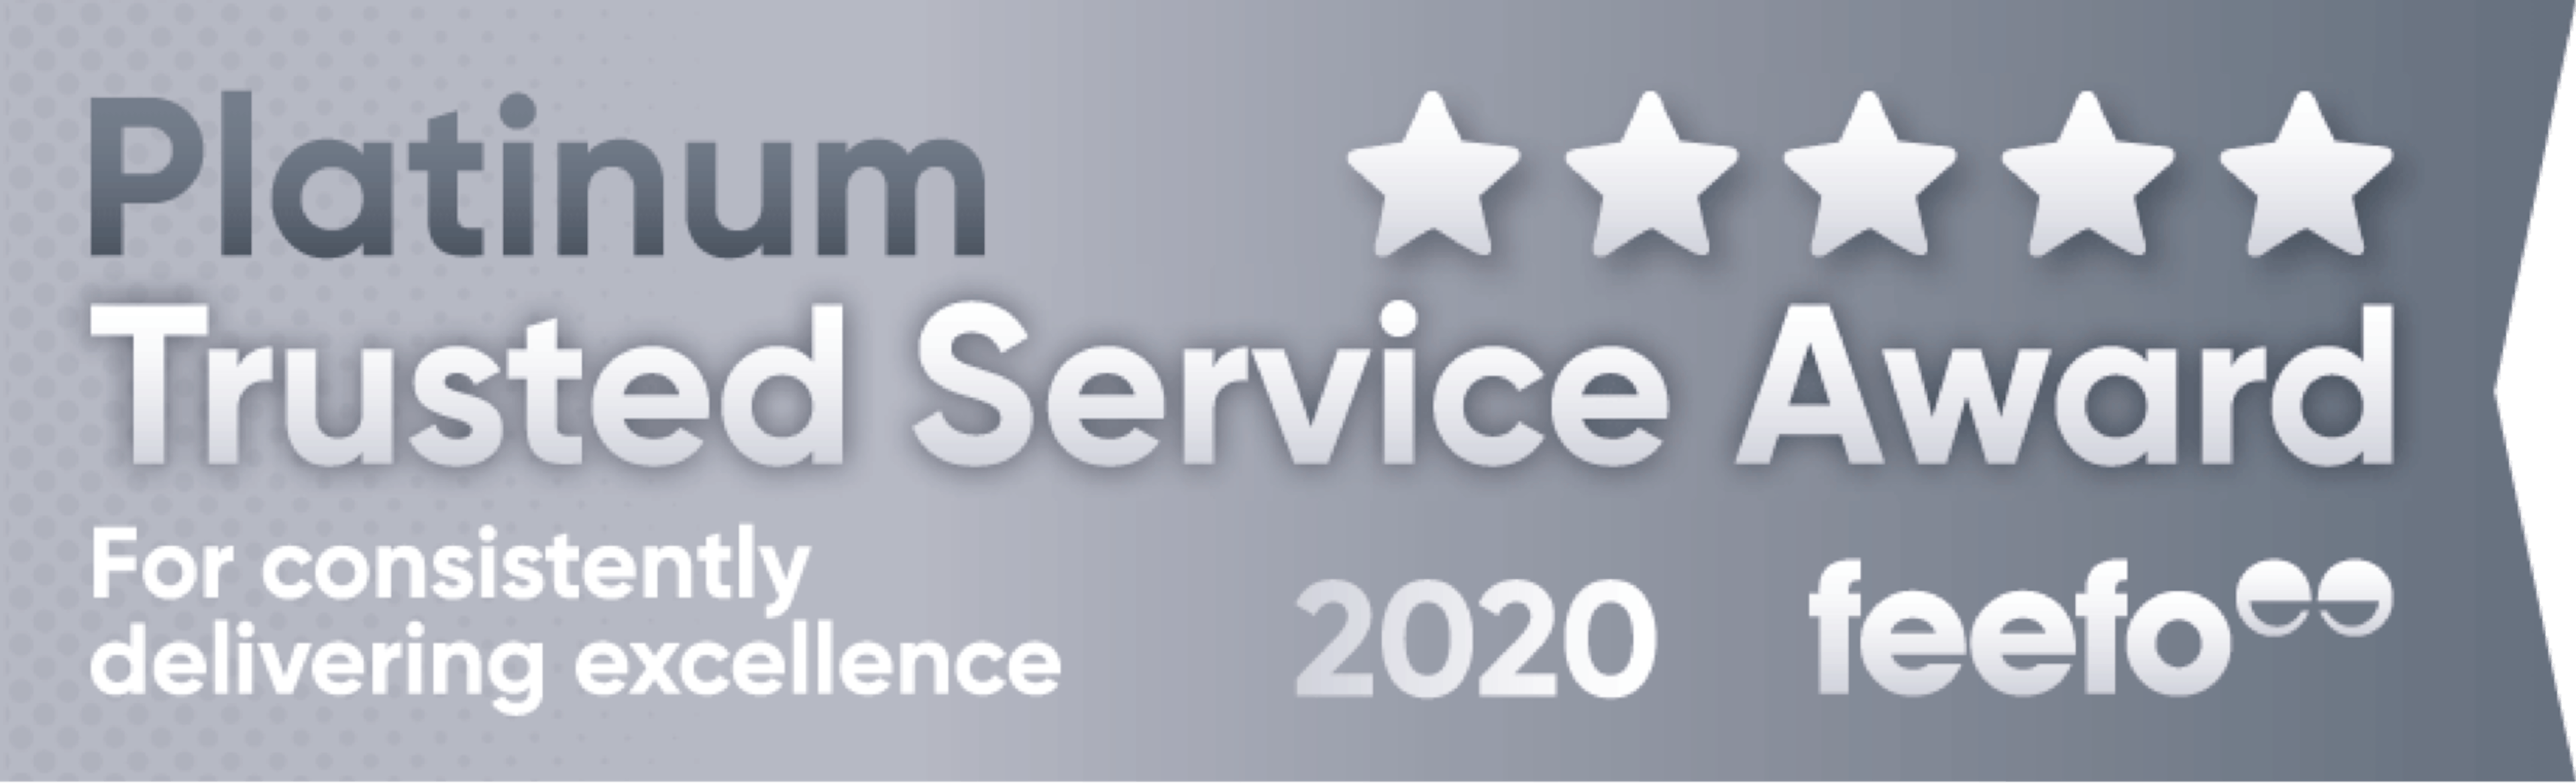 Platinum Trusted Service Award 2020 feefo award logo